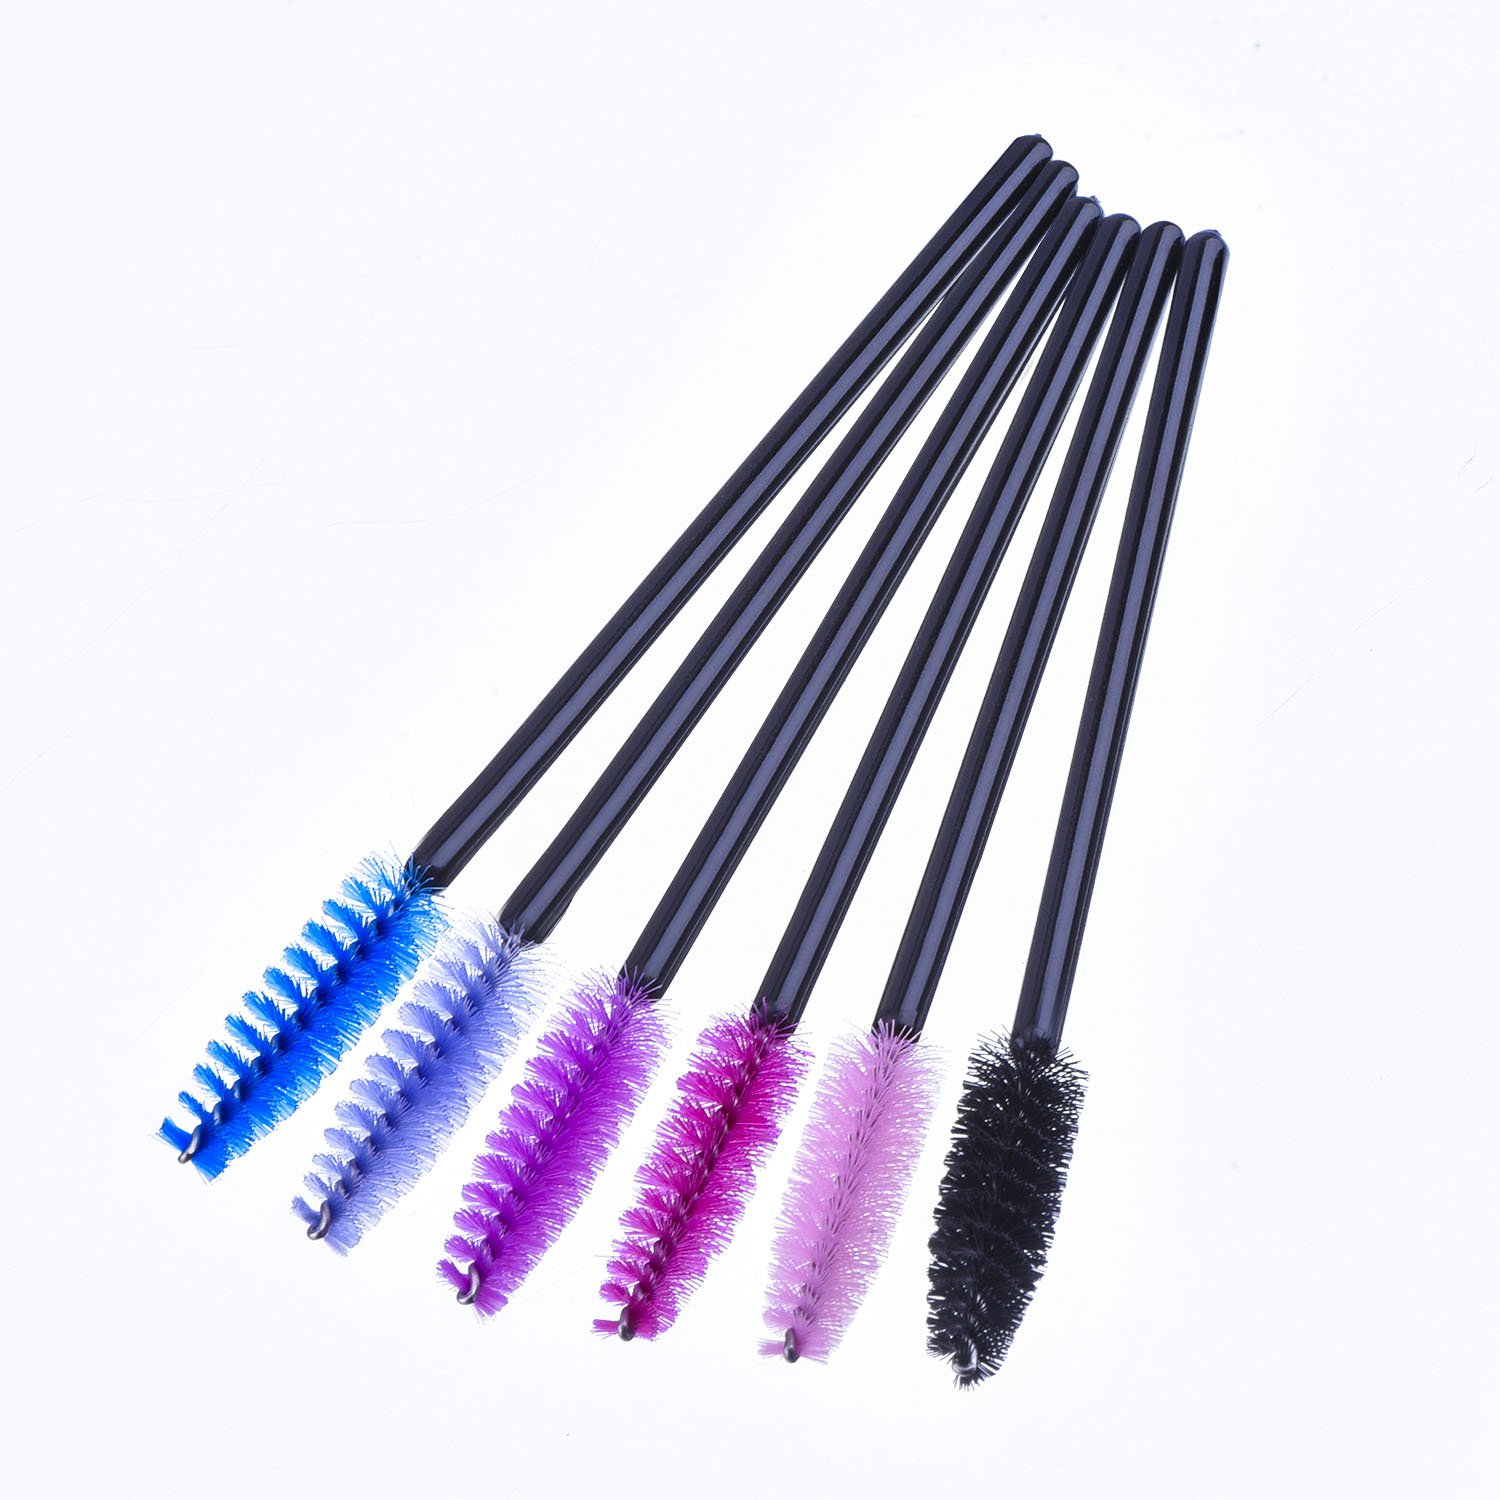 eBoot 300 Pieces Colored Disposable Mascara Wands Eyelash Eye Lash Brush Makeup Applicators Kit (Black Handle, Multicolor Head)